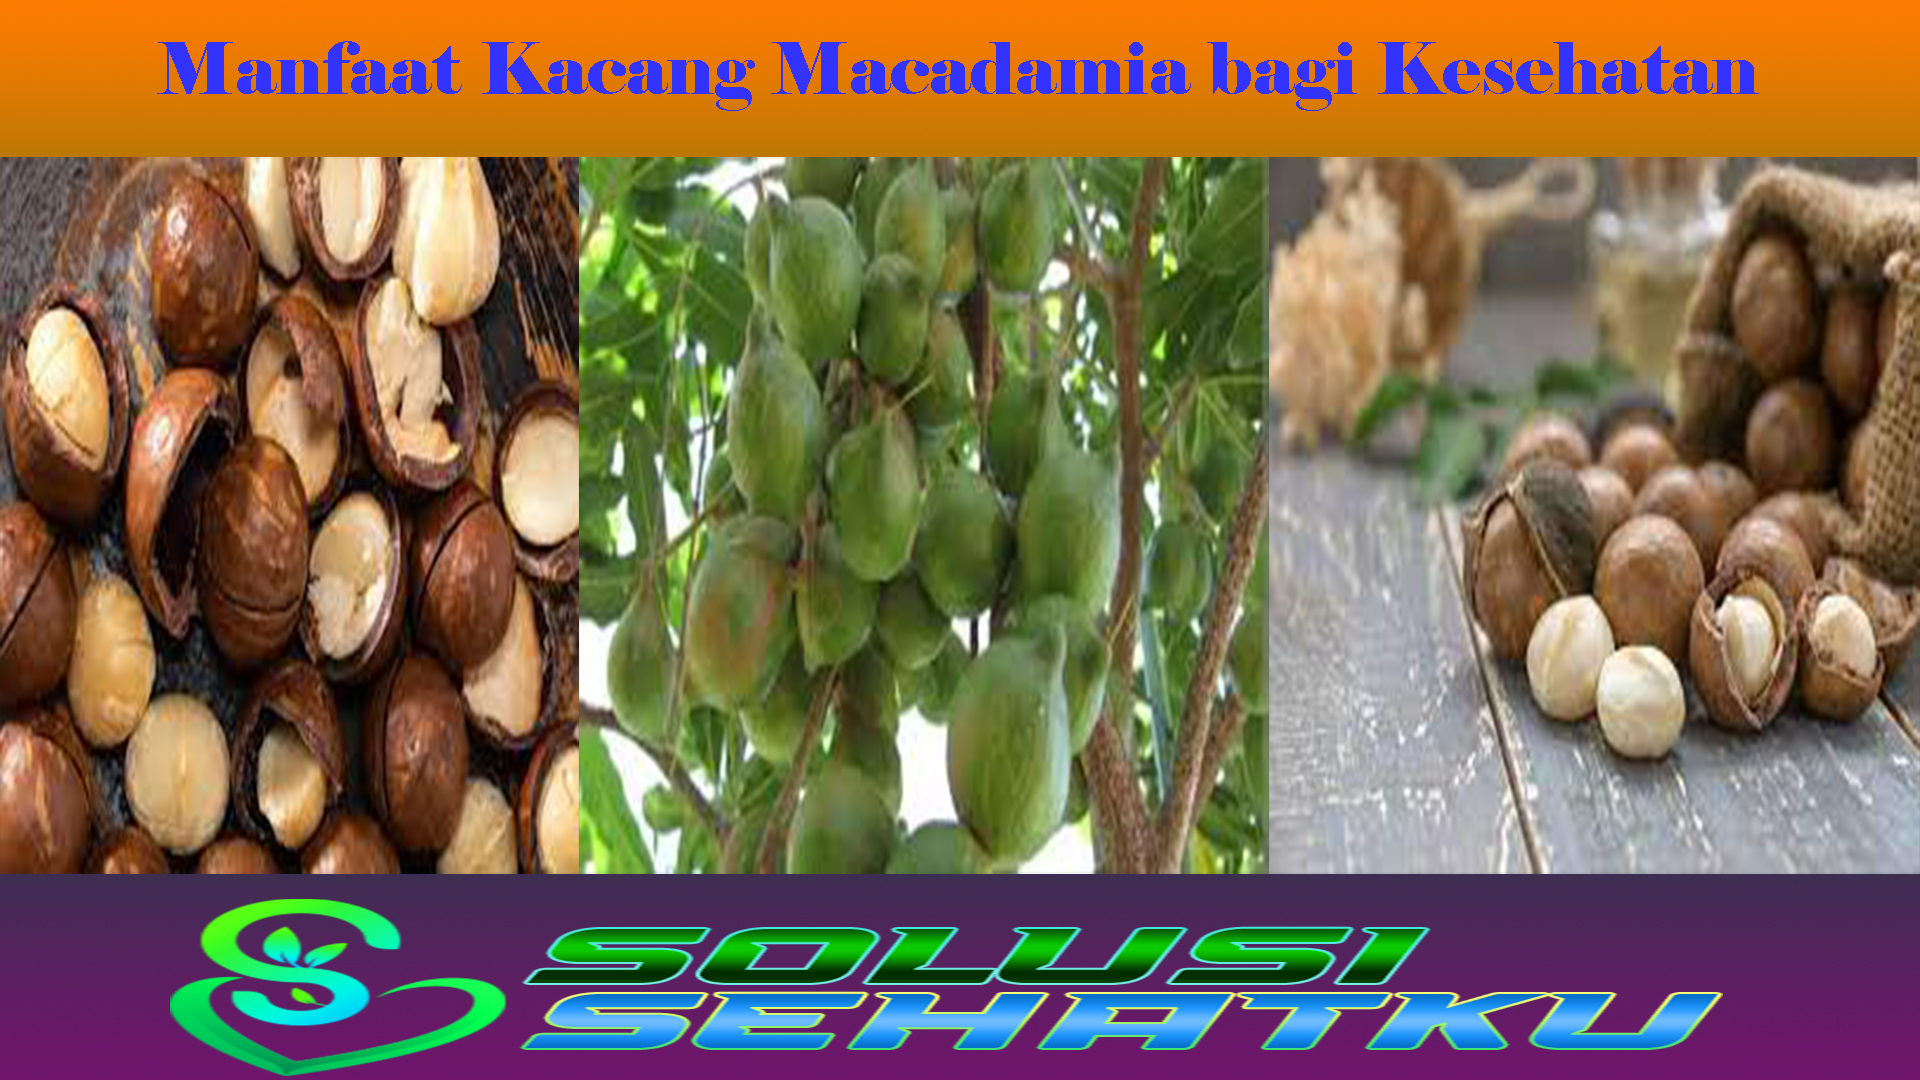 Manfaat Kacang Macadamia bagi Kesehatan